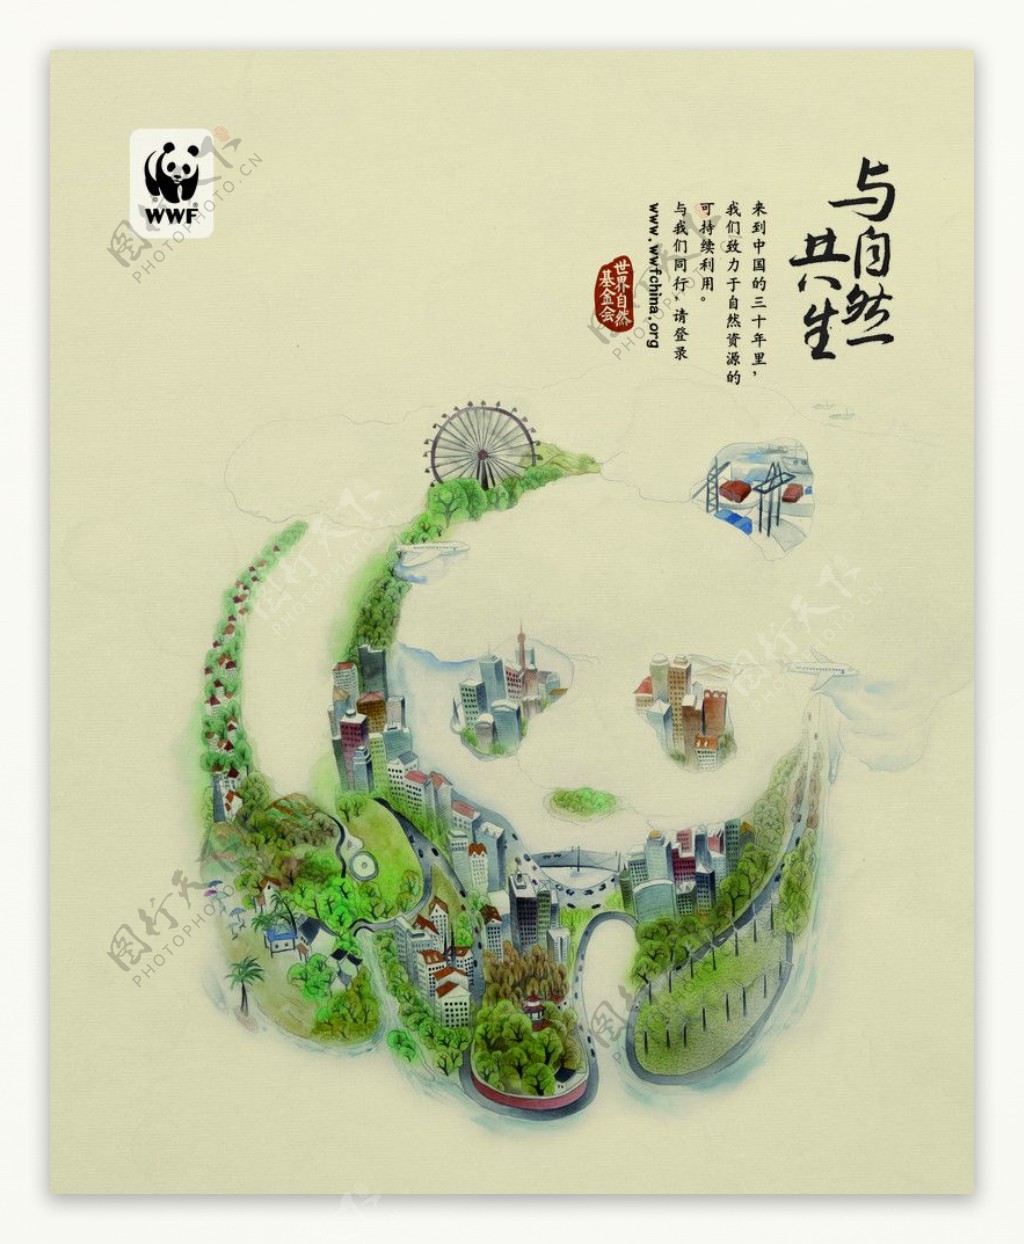 WWF世界自然基金会图片